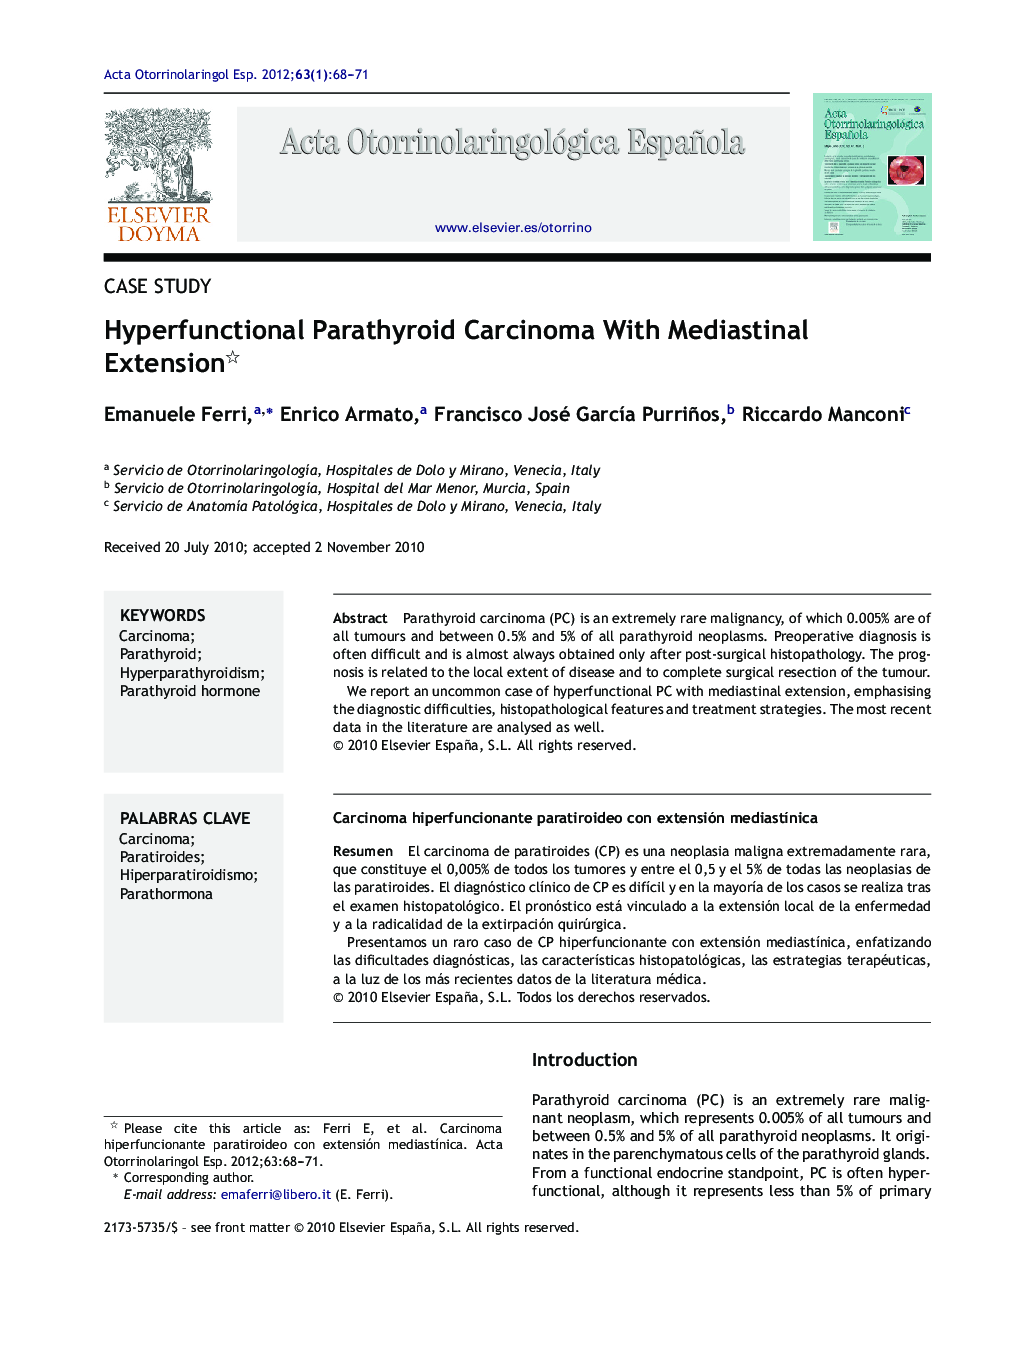 Hyperfunctional Parathyroid Carcinoma With Mediastinal Extension 